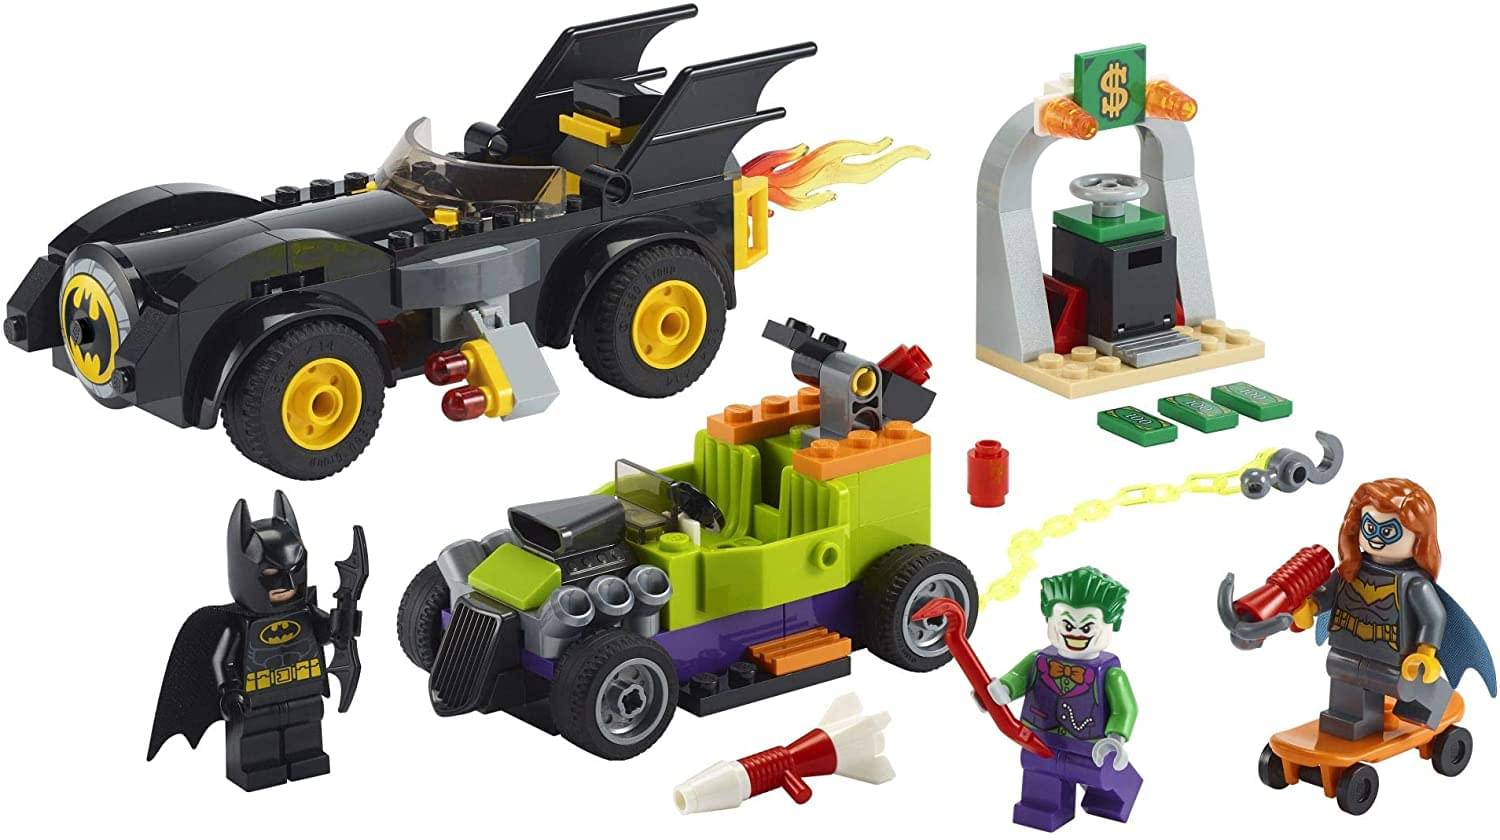 LEGO DC Comics 7611360 Batman vs. Joker Batmobile Chase 136 Piece Building Kit